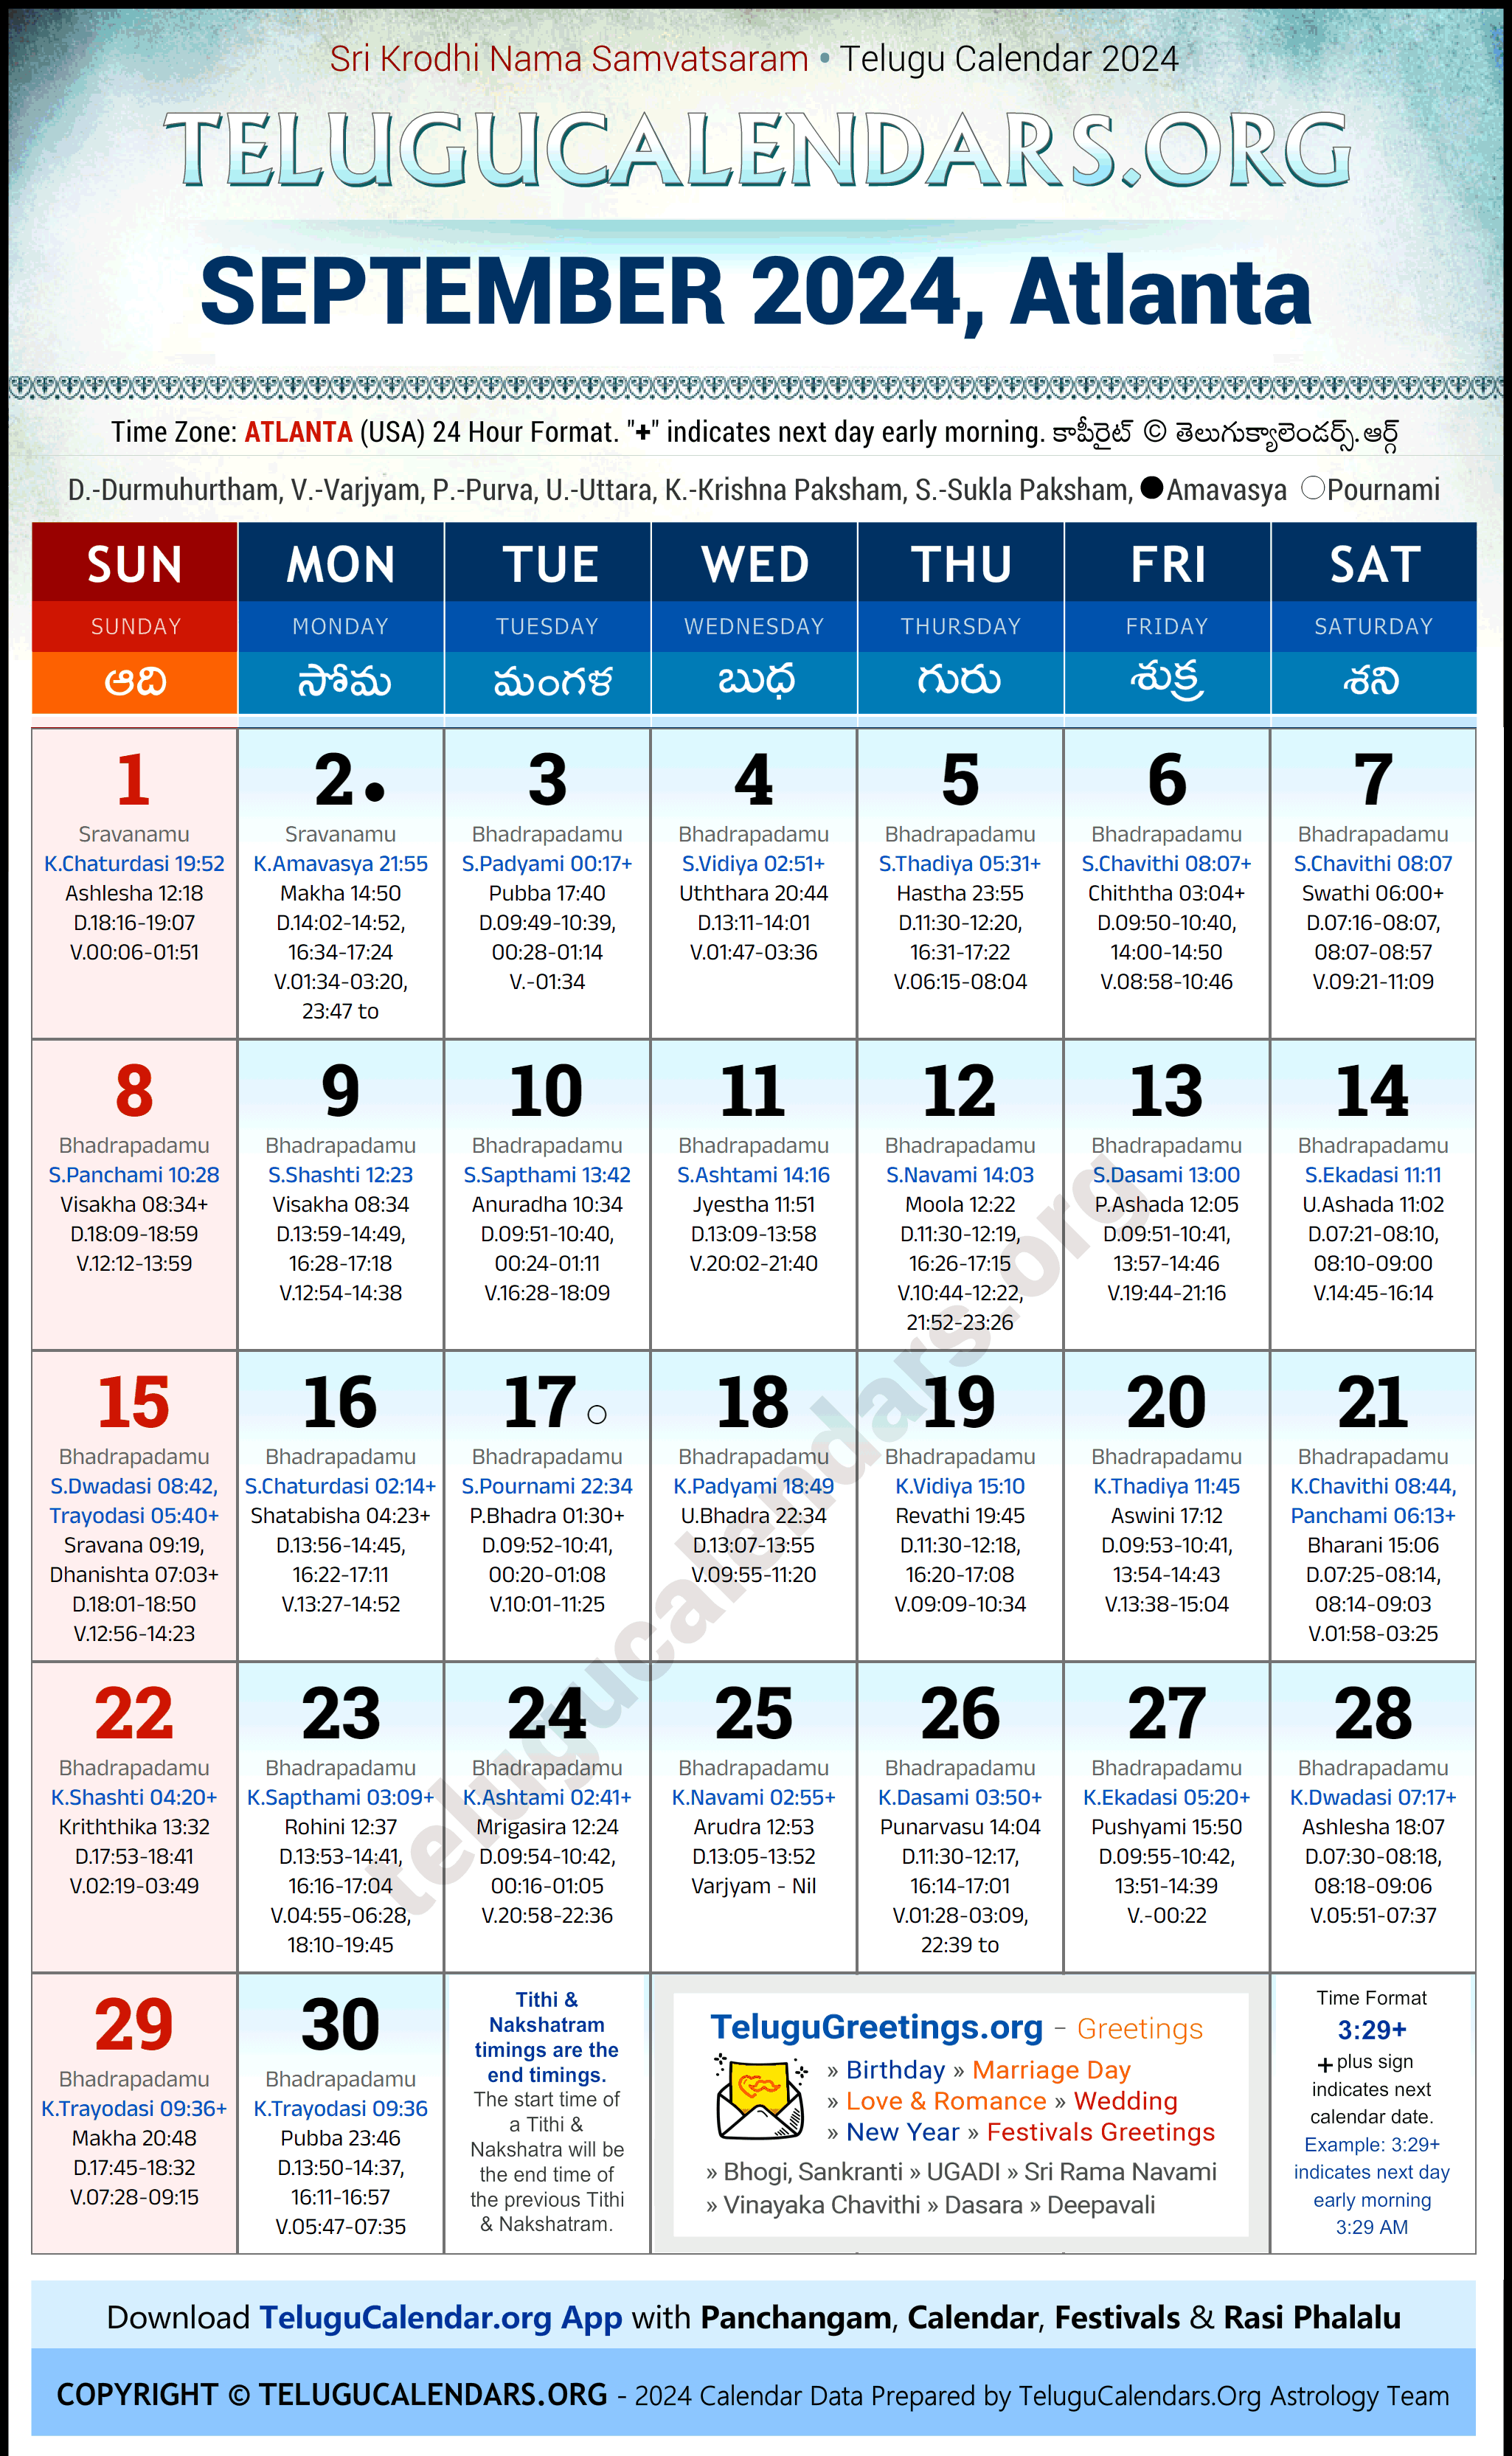 Telugu Calendar 2024 September Festivals for Atlanta